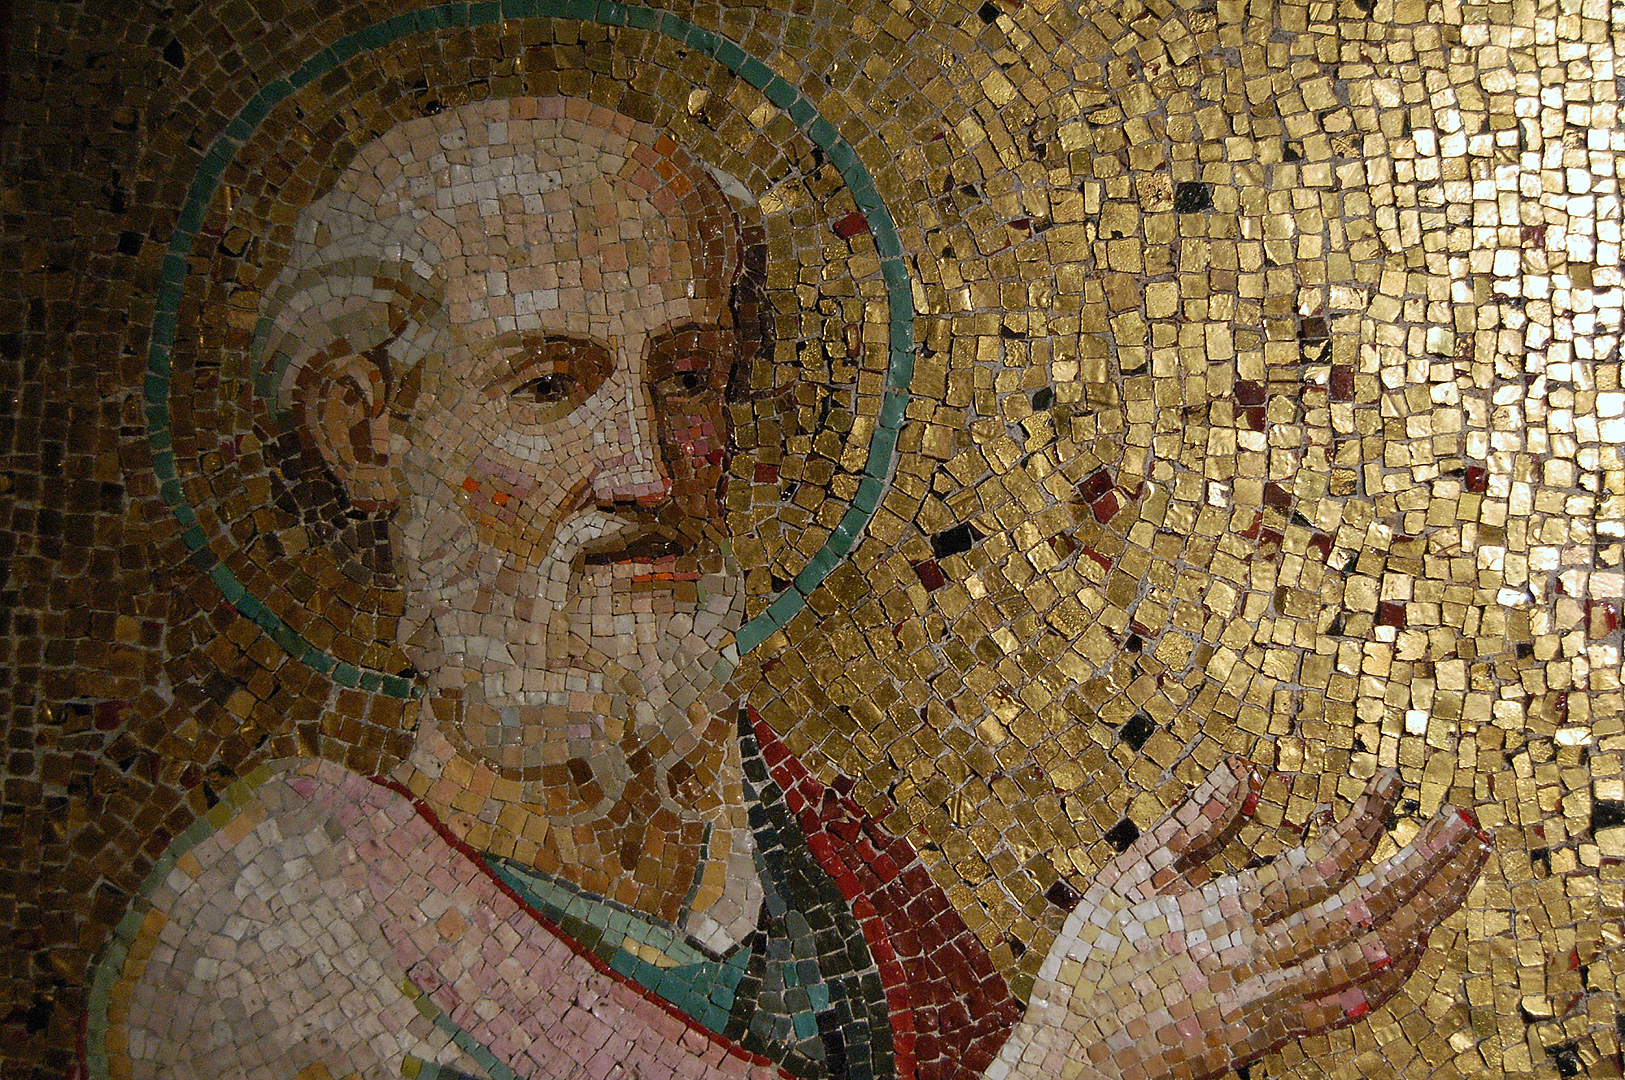 De apostel Paulus, mozaek, Rome, The apostle Paul, mosaic, Rome